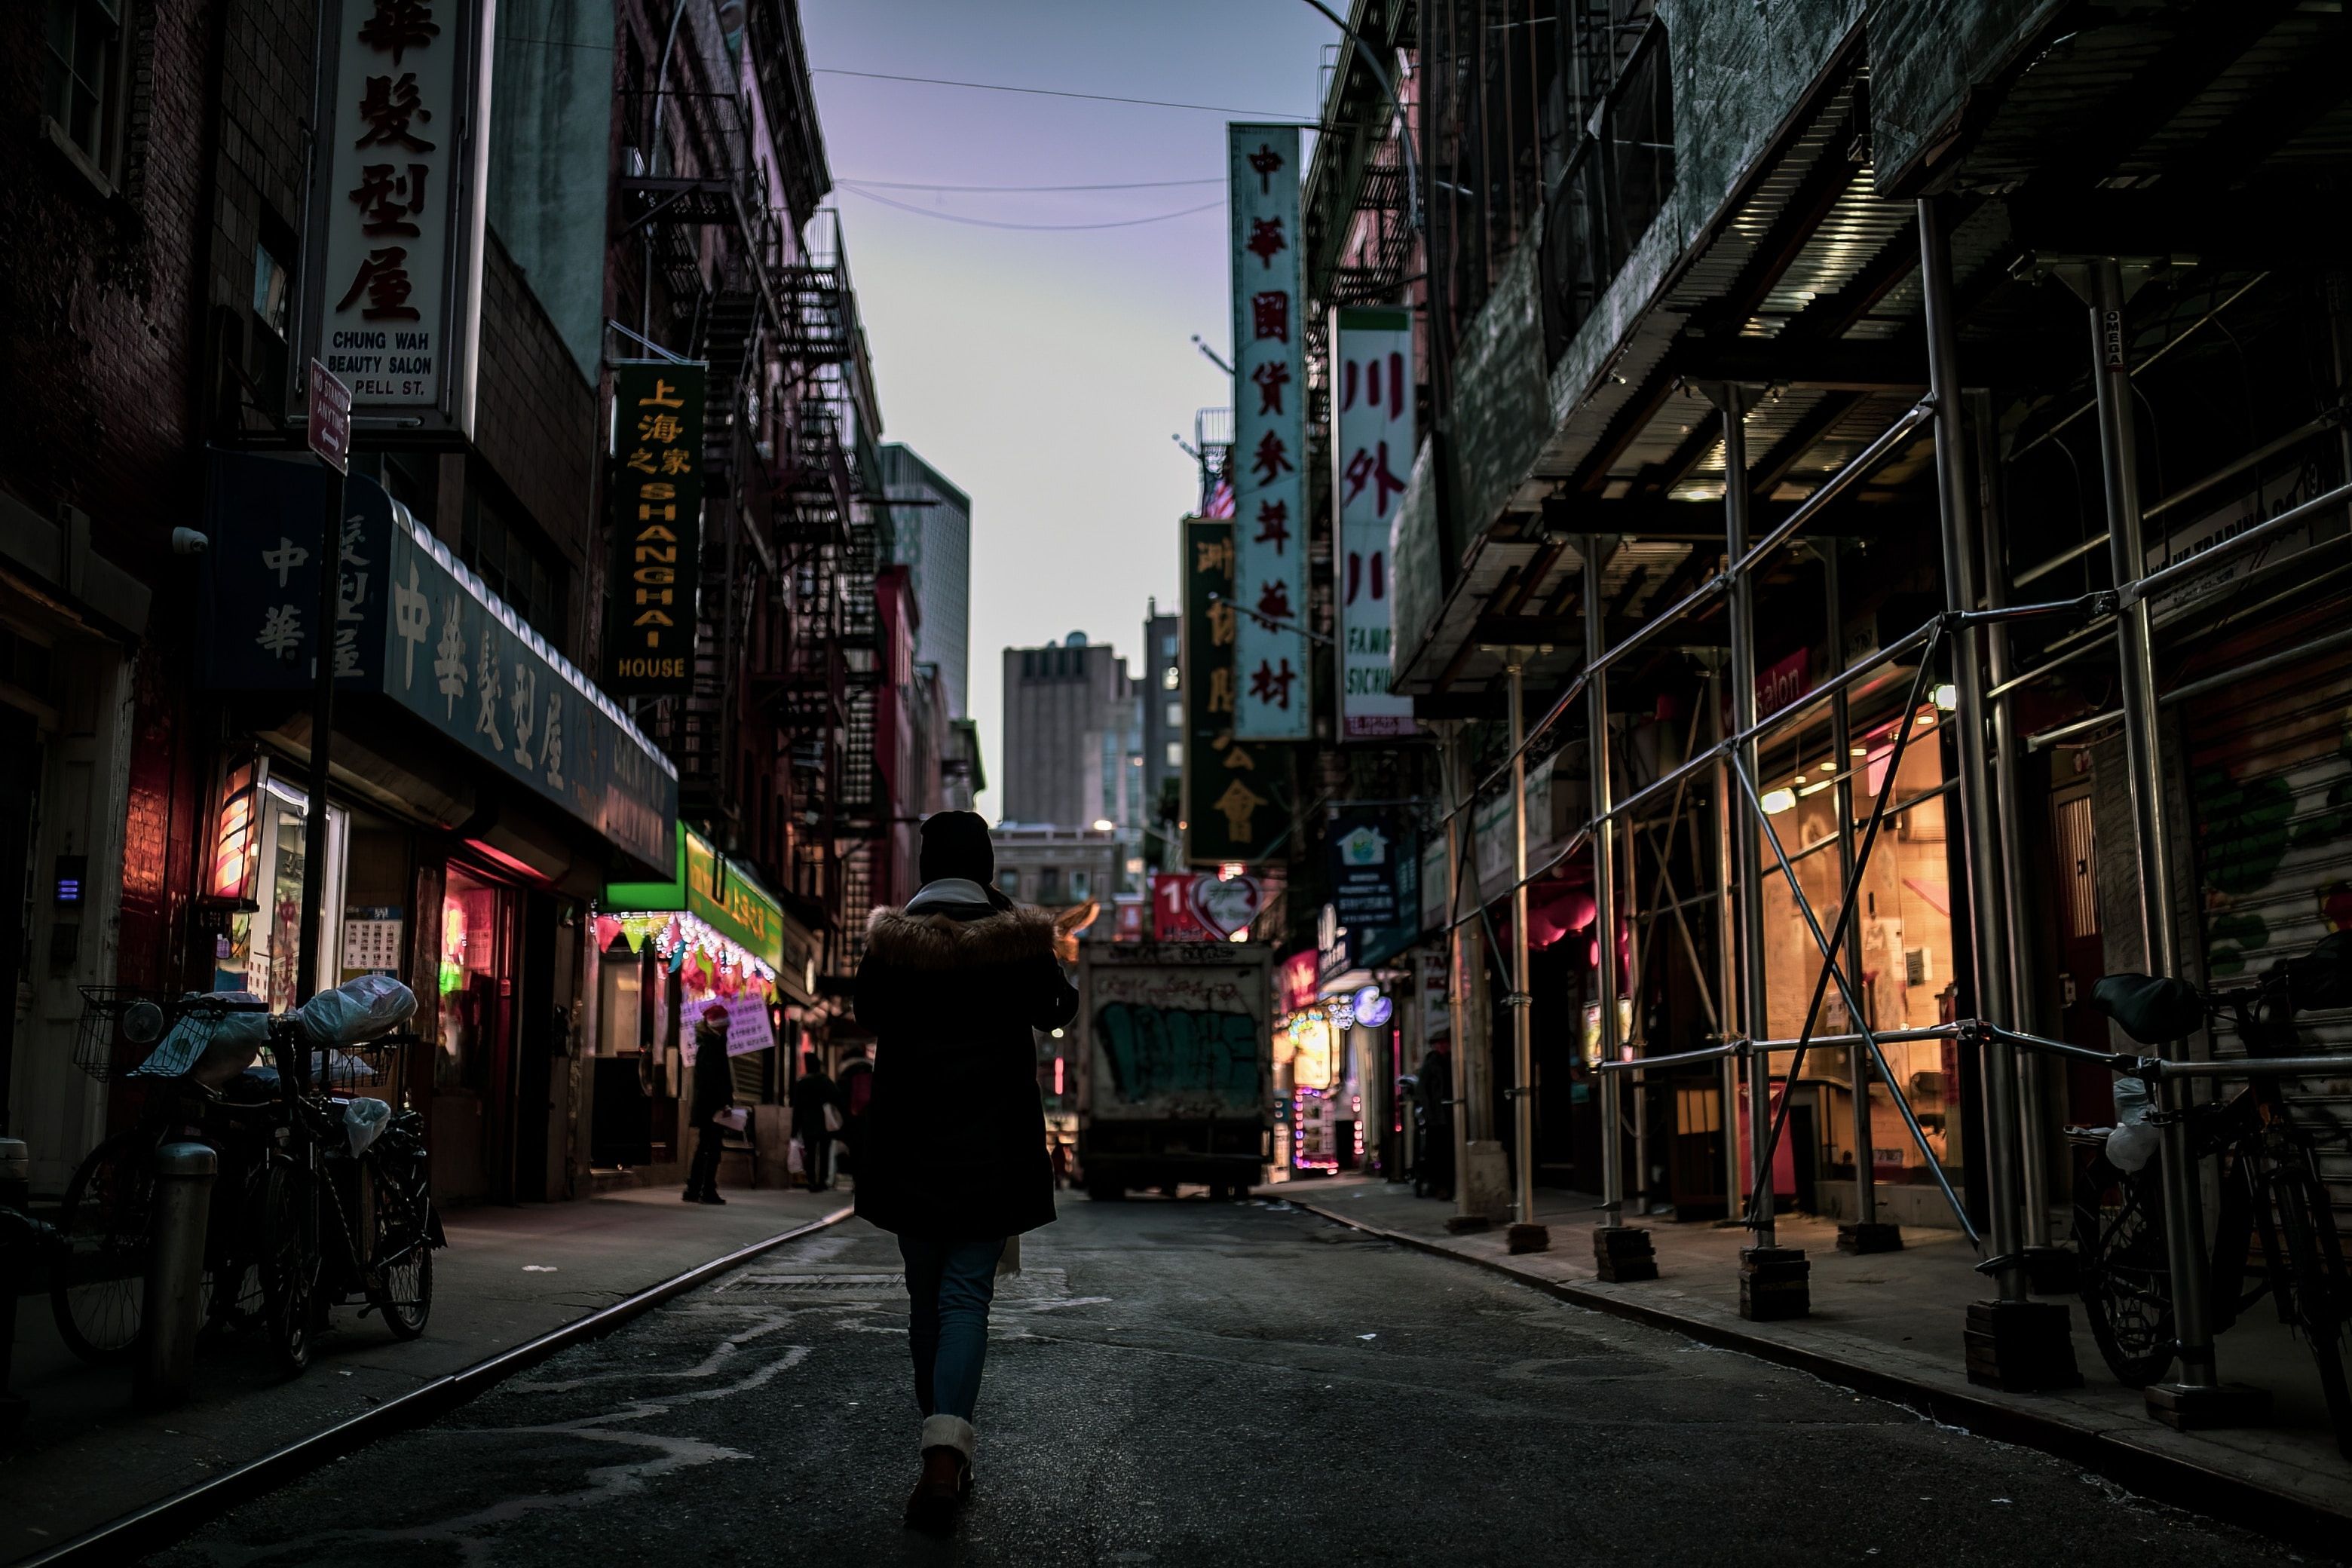 A tourist strolling through a street in Chinatown, Manhattan, NYC